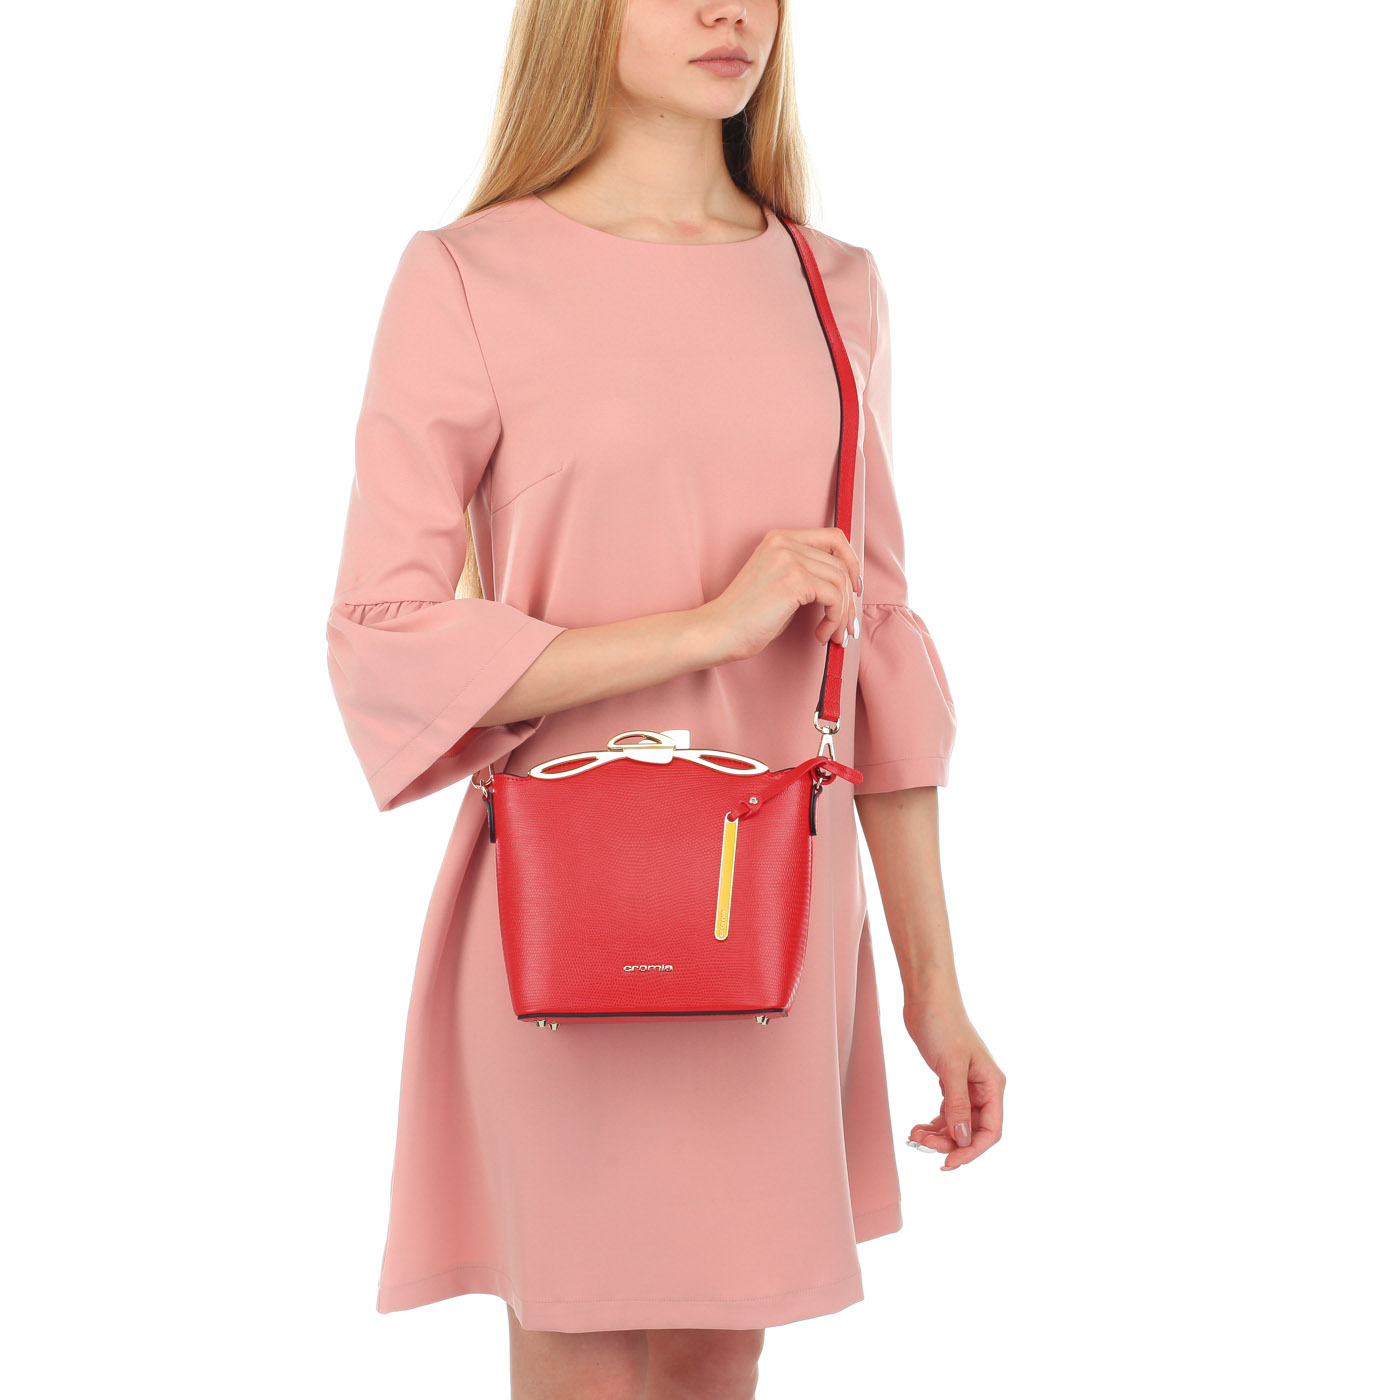 Женская сумочка красного цвета Cromia Aika